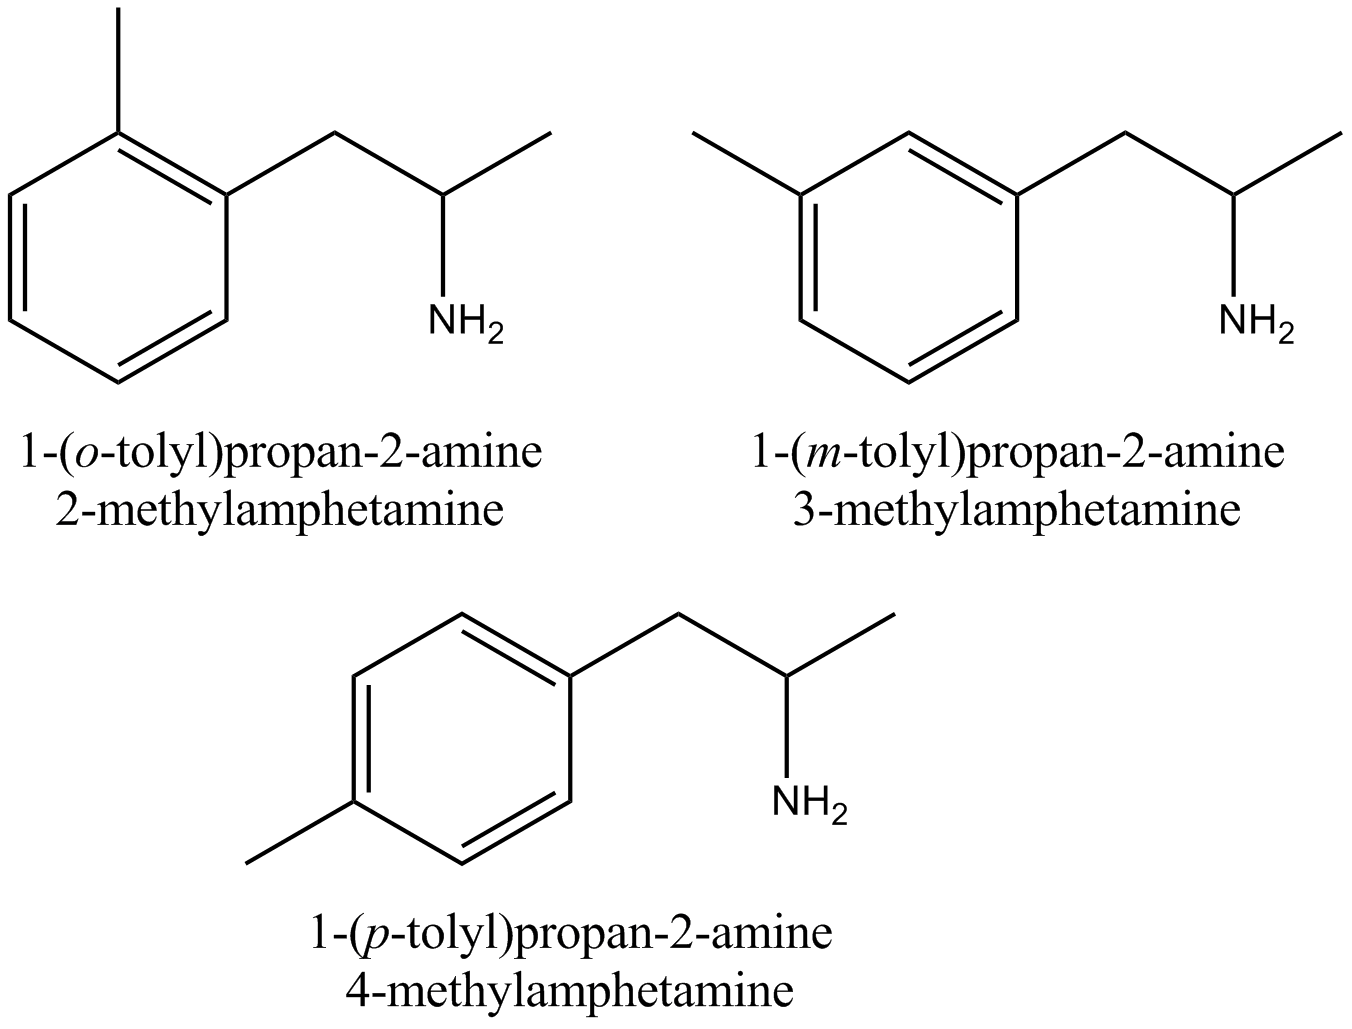 methylamphetamine